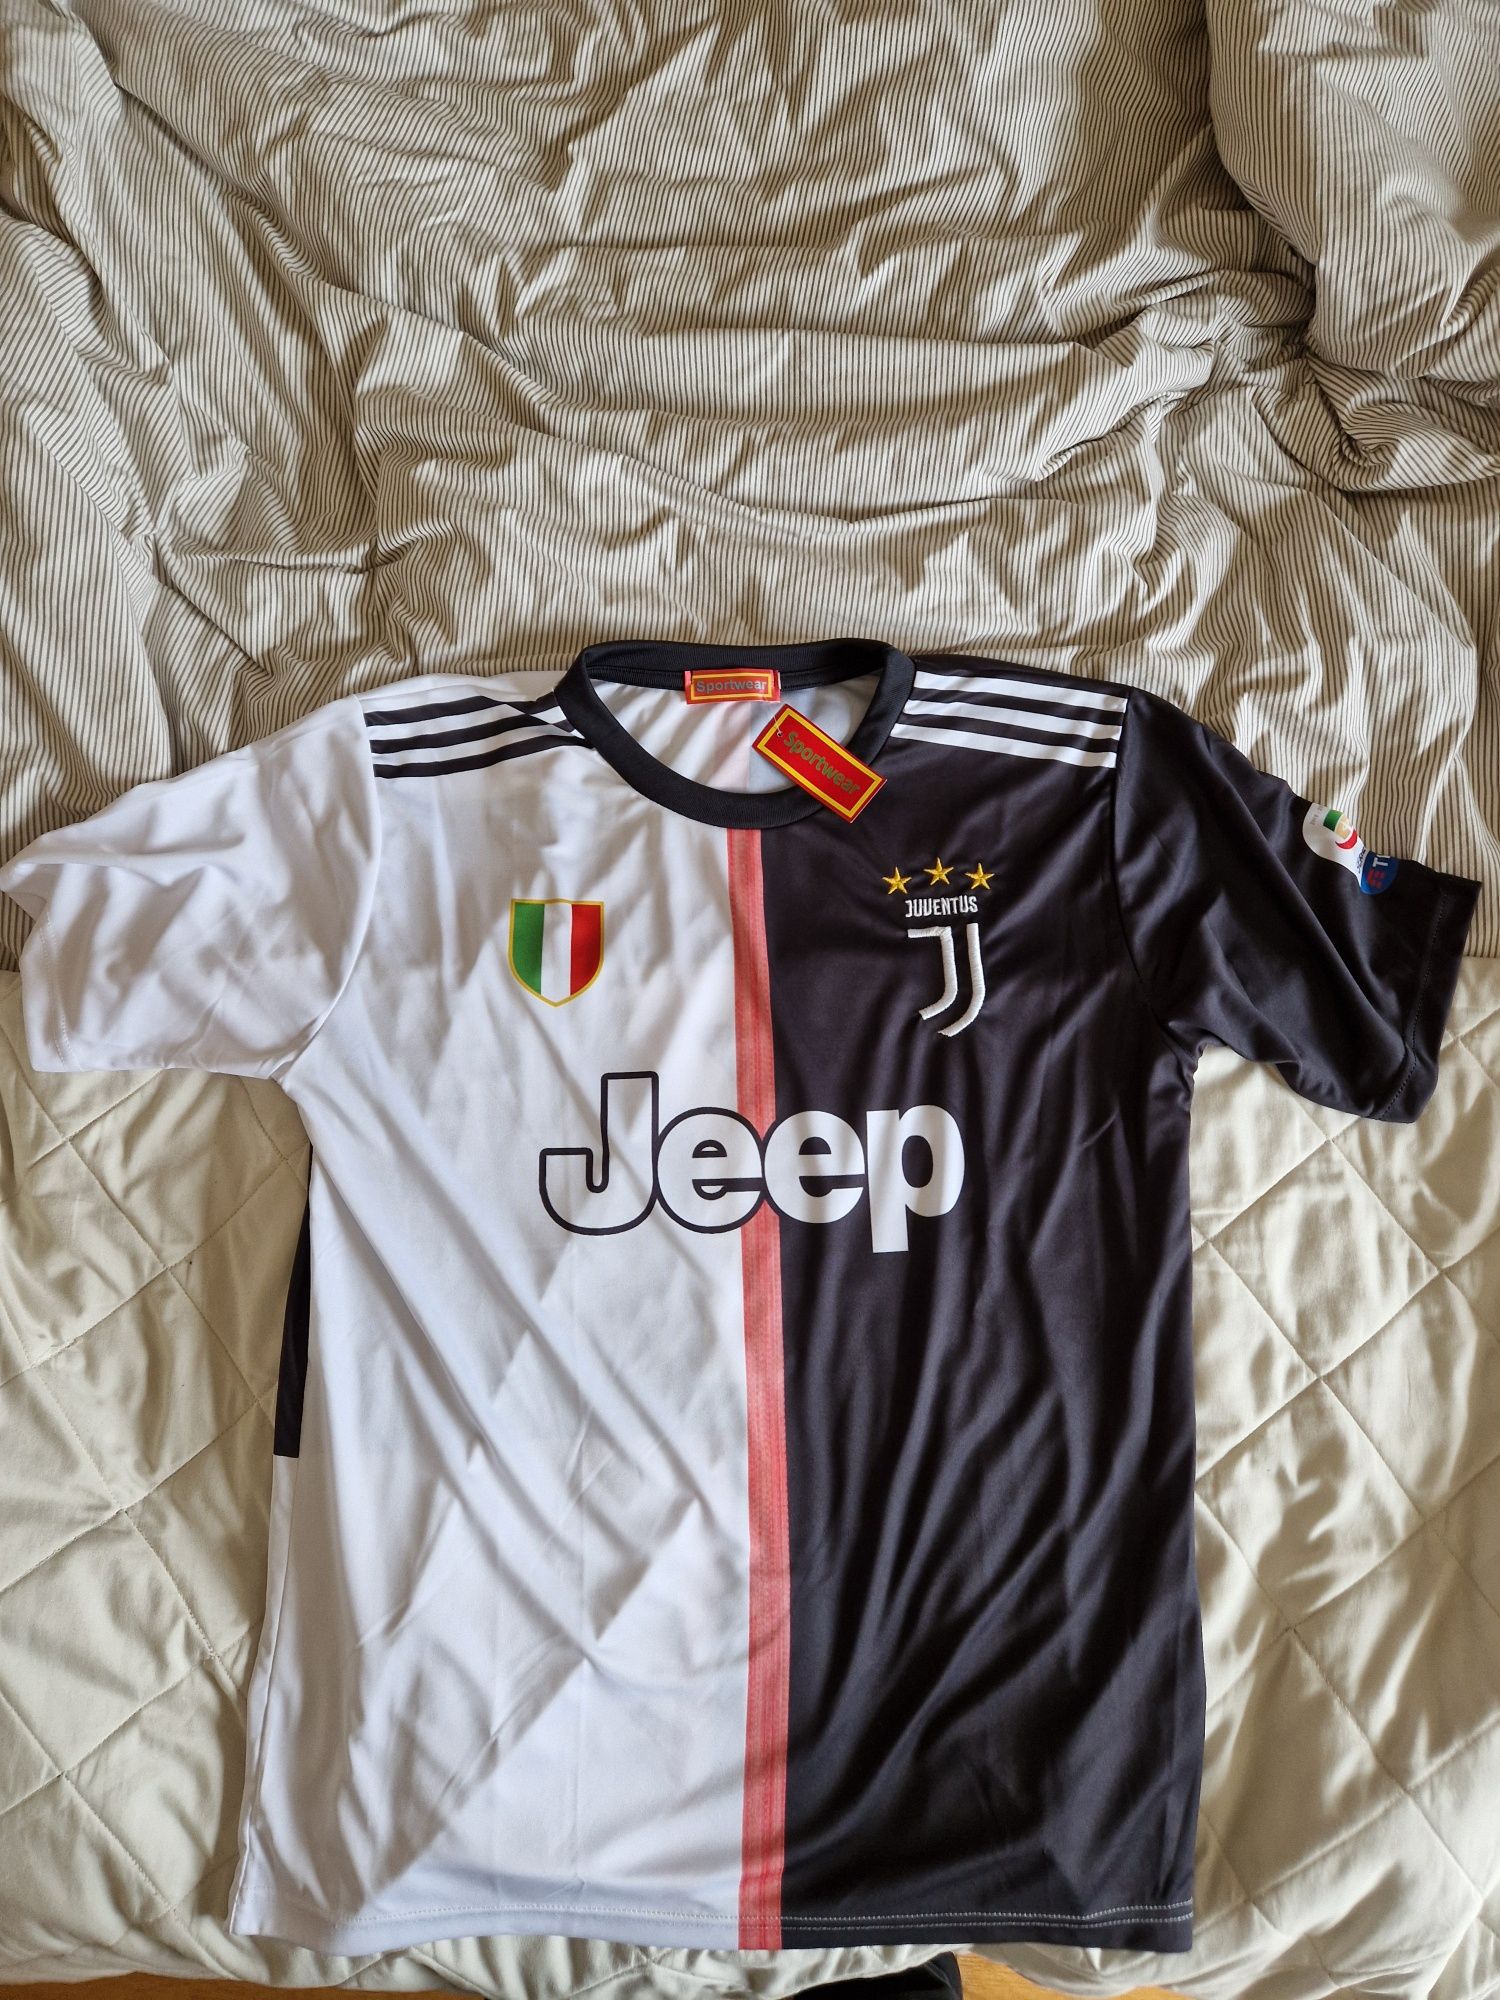 Camisola Juventus Ronaldo - tamanho M